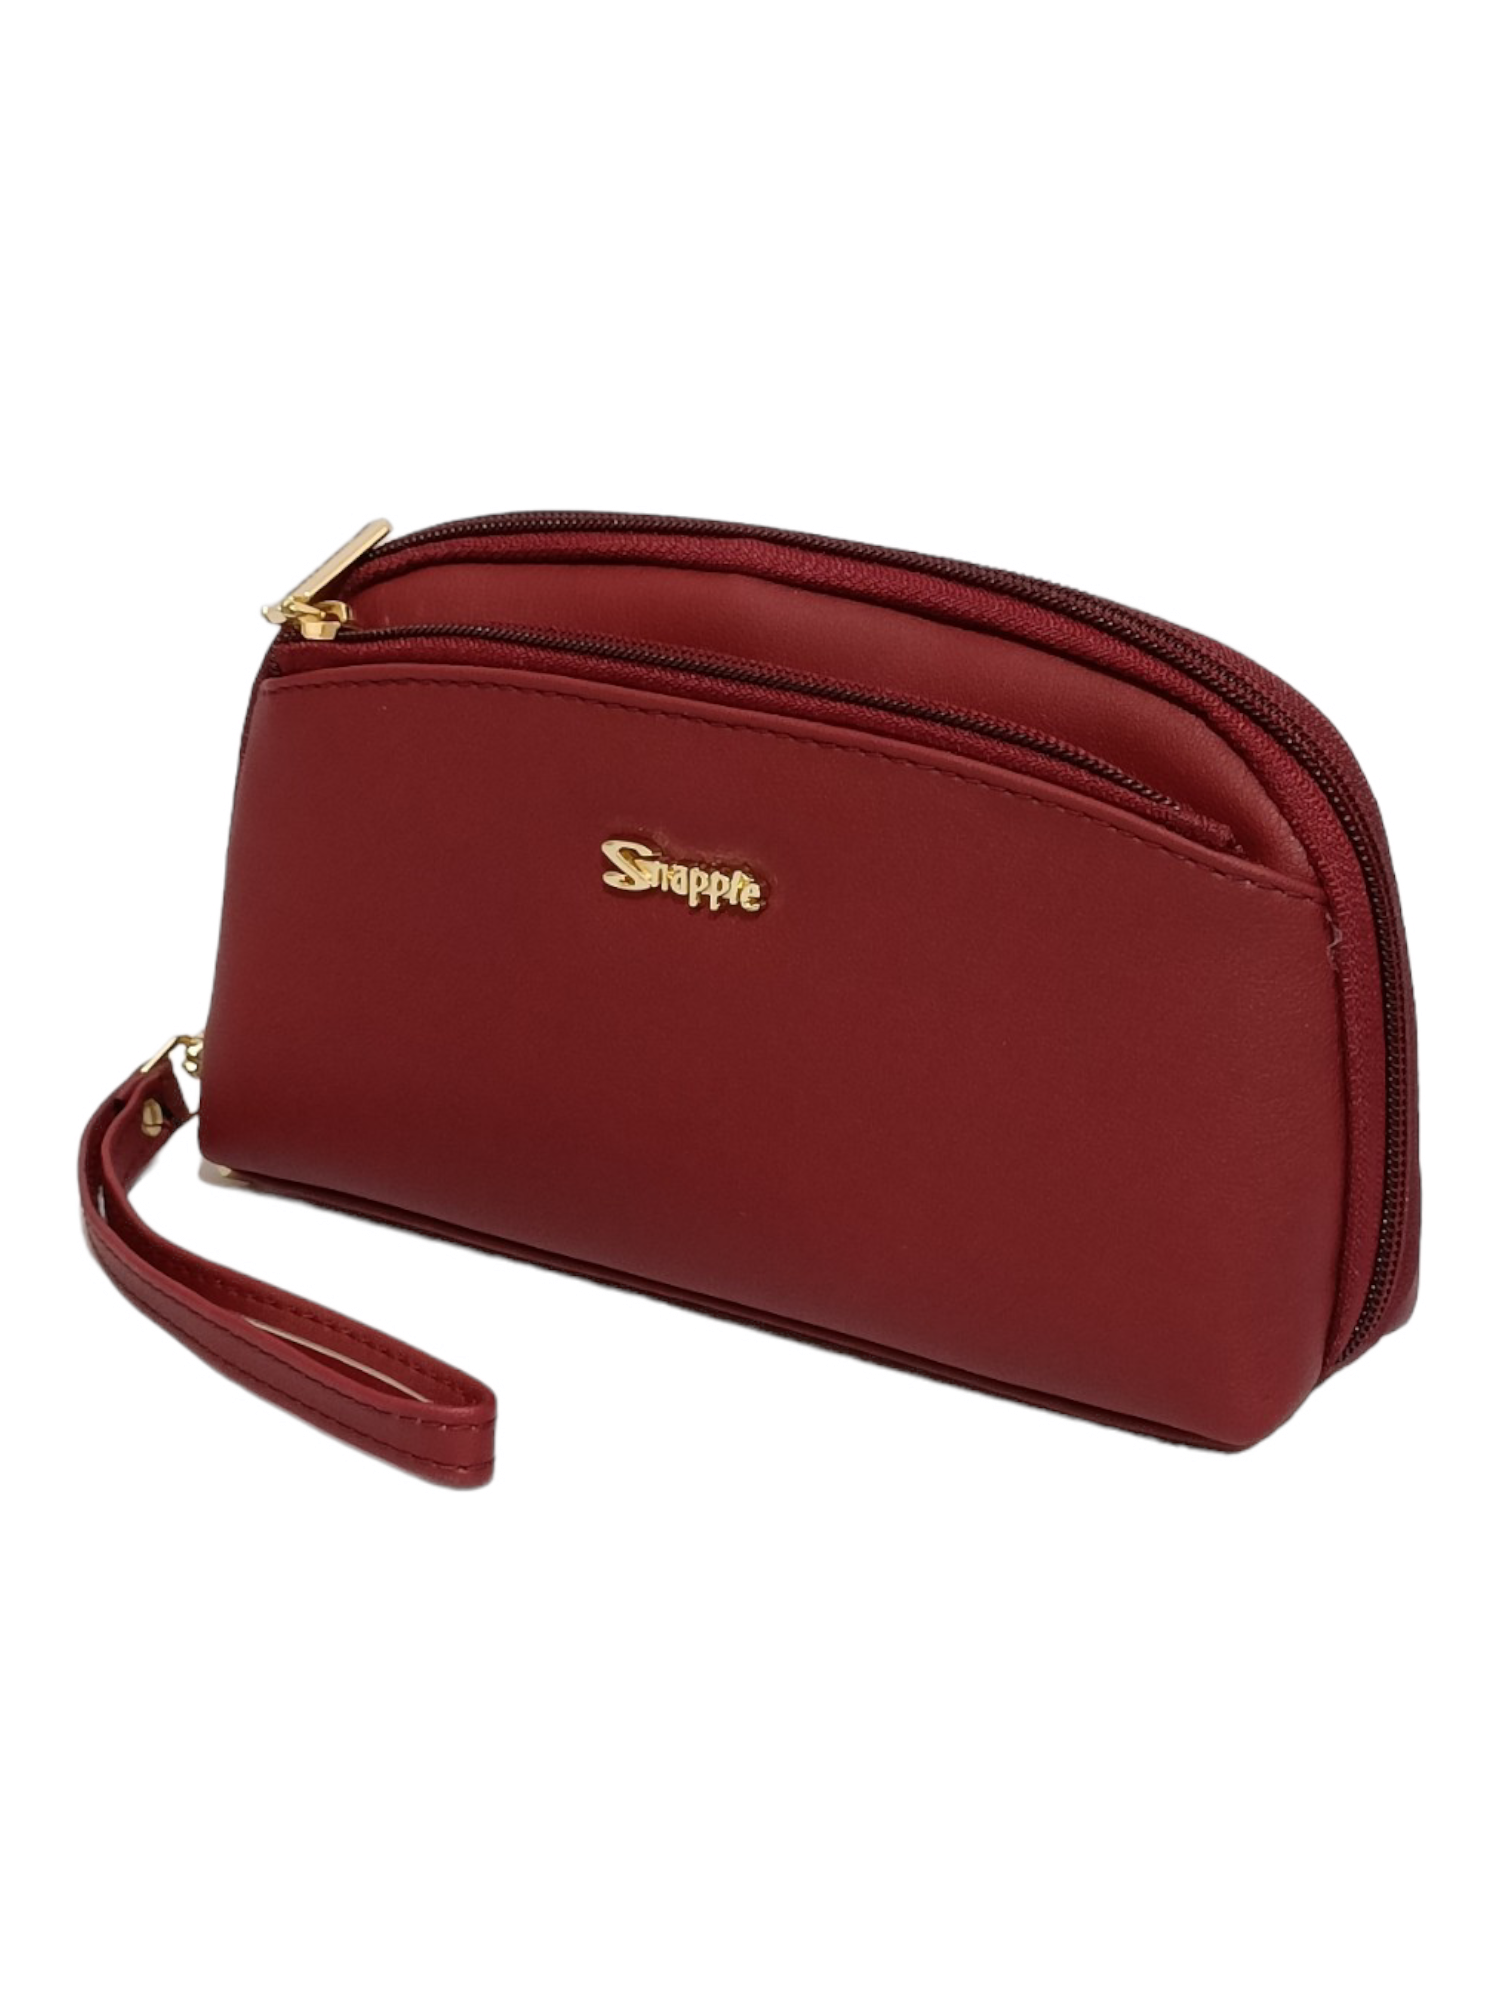 Clutch Purse, Evening Bag, Leather Wristlet | Mayko Bags